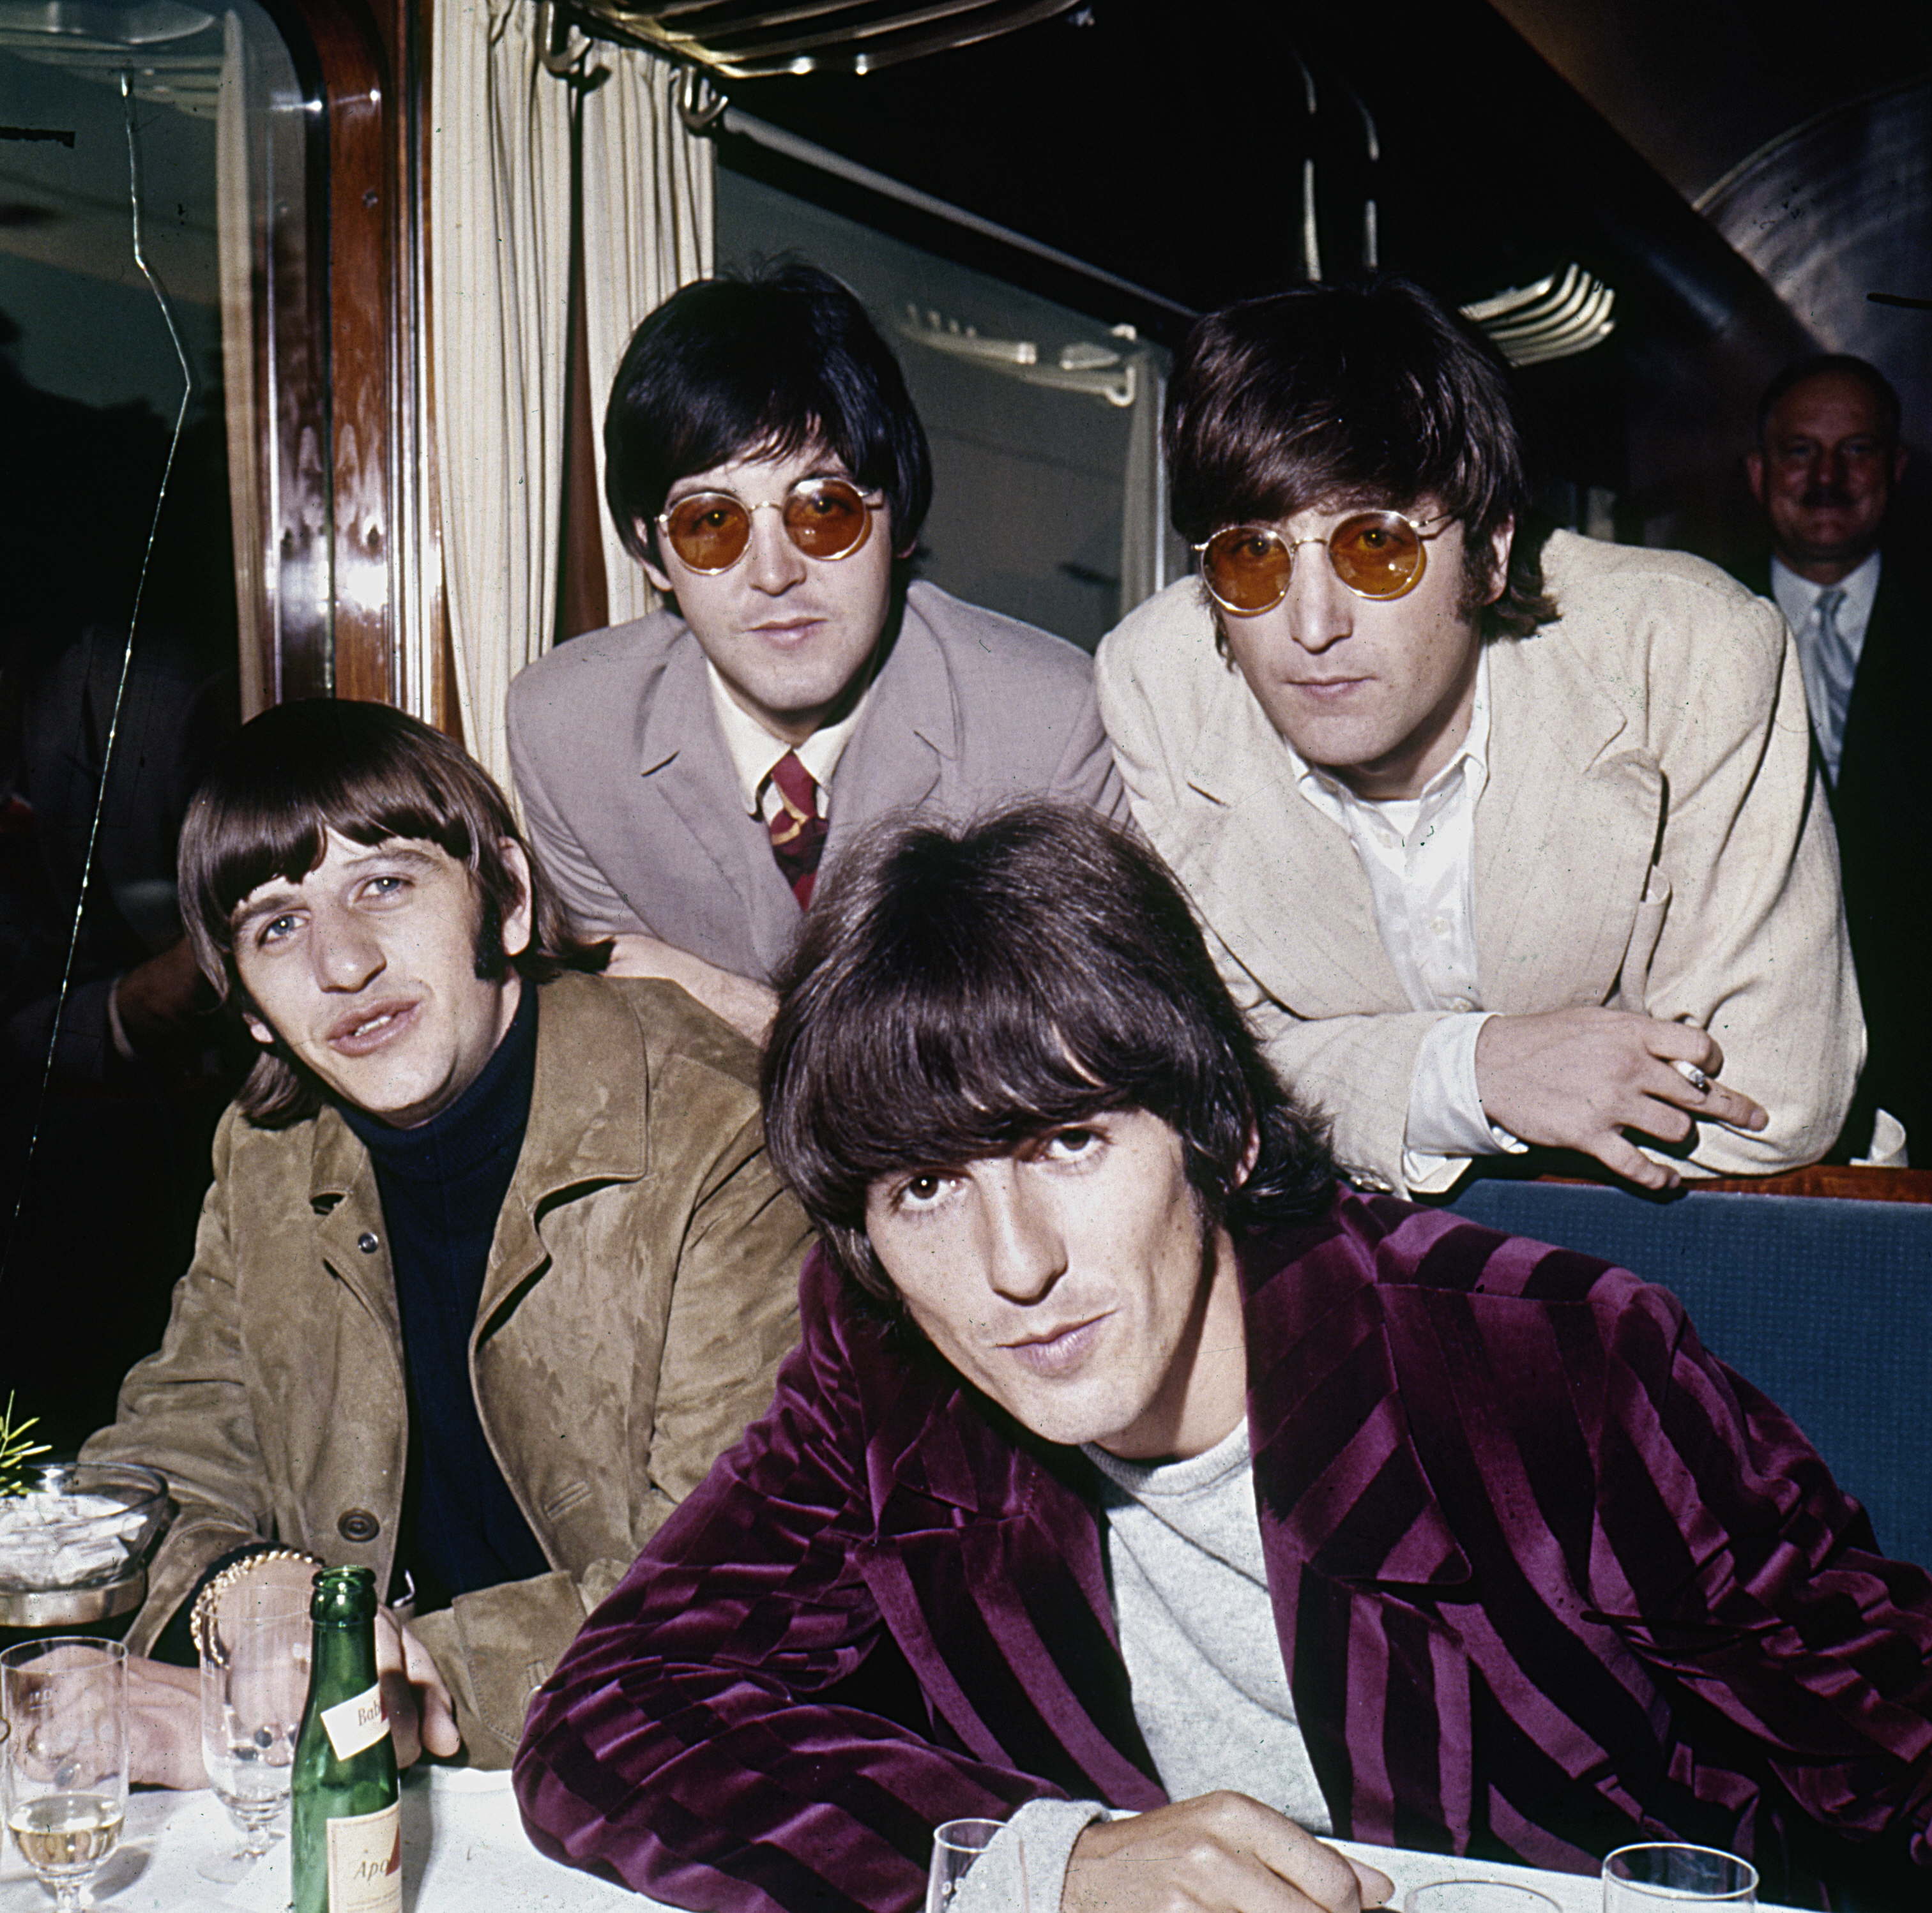 Ringo Starr of The Beatles, Paul McCartney, George Harrison and John Lennon at a table